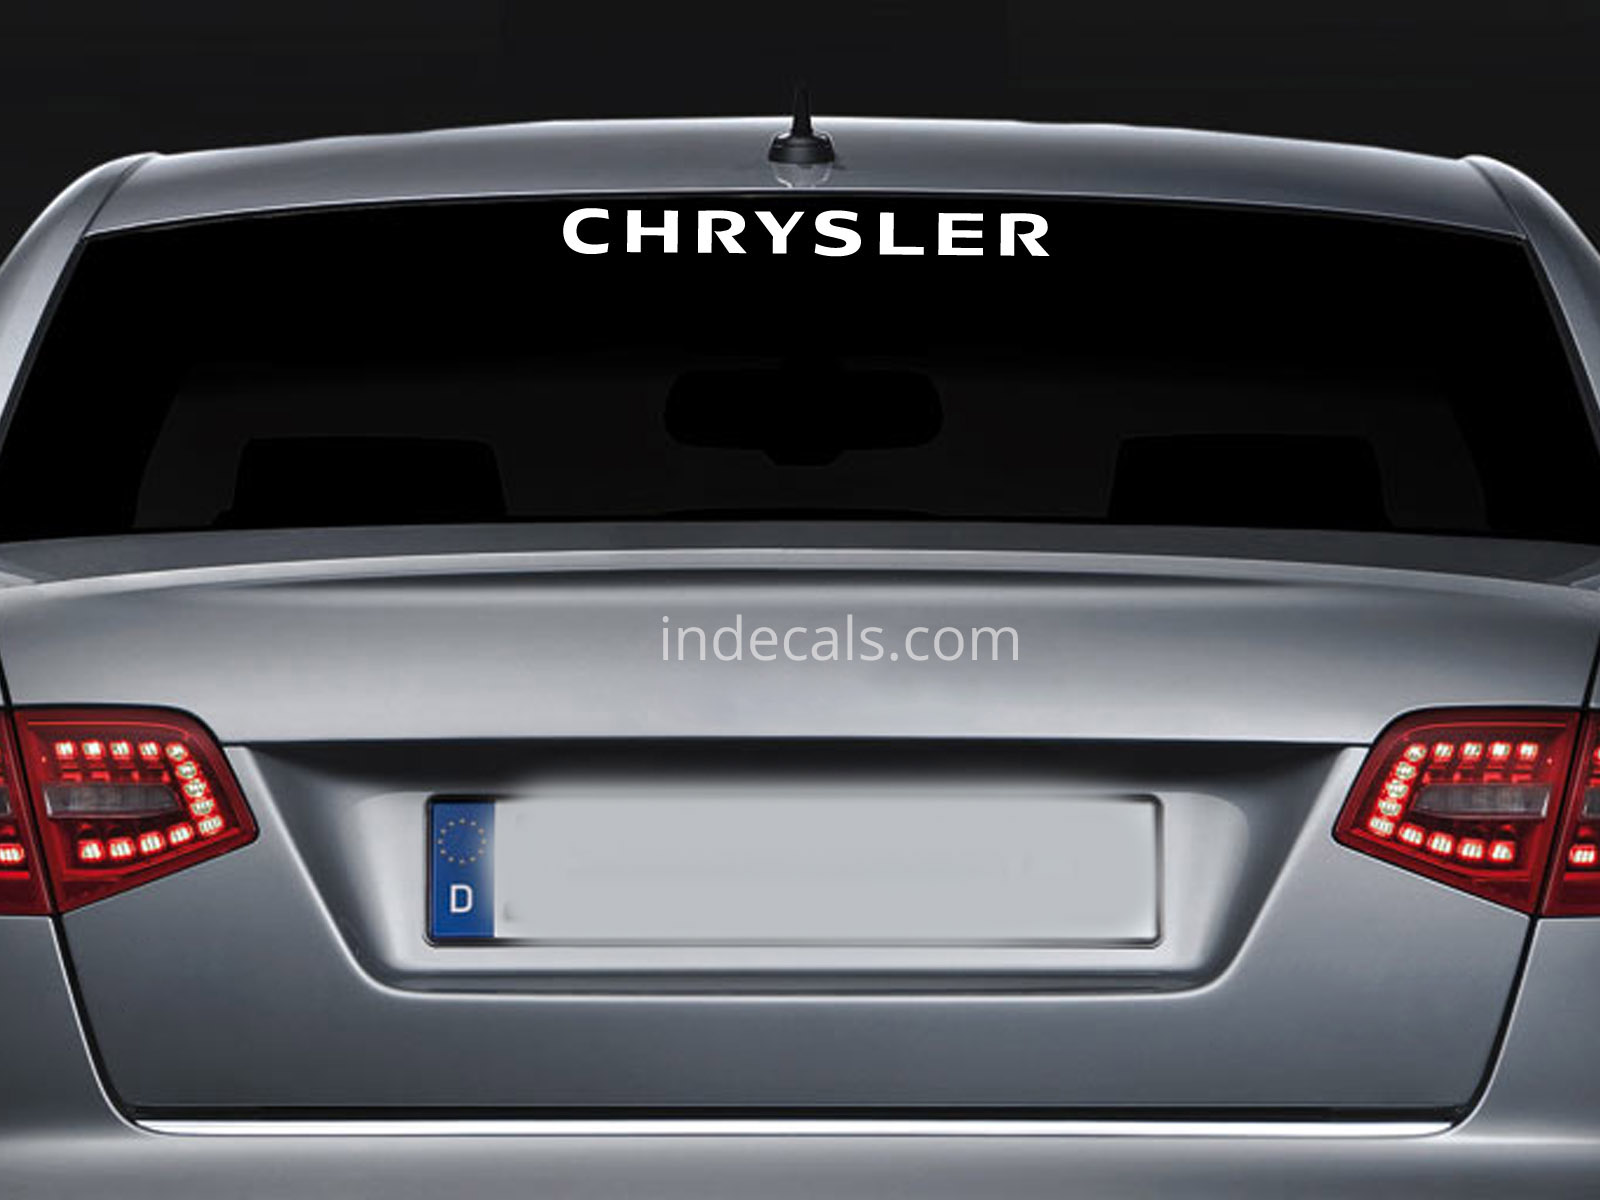 1 x Chrysler Sticker for Windshield or Back Window - White